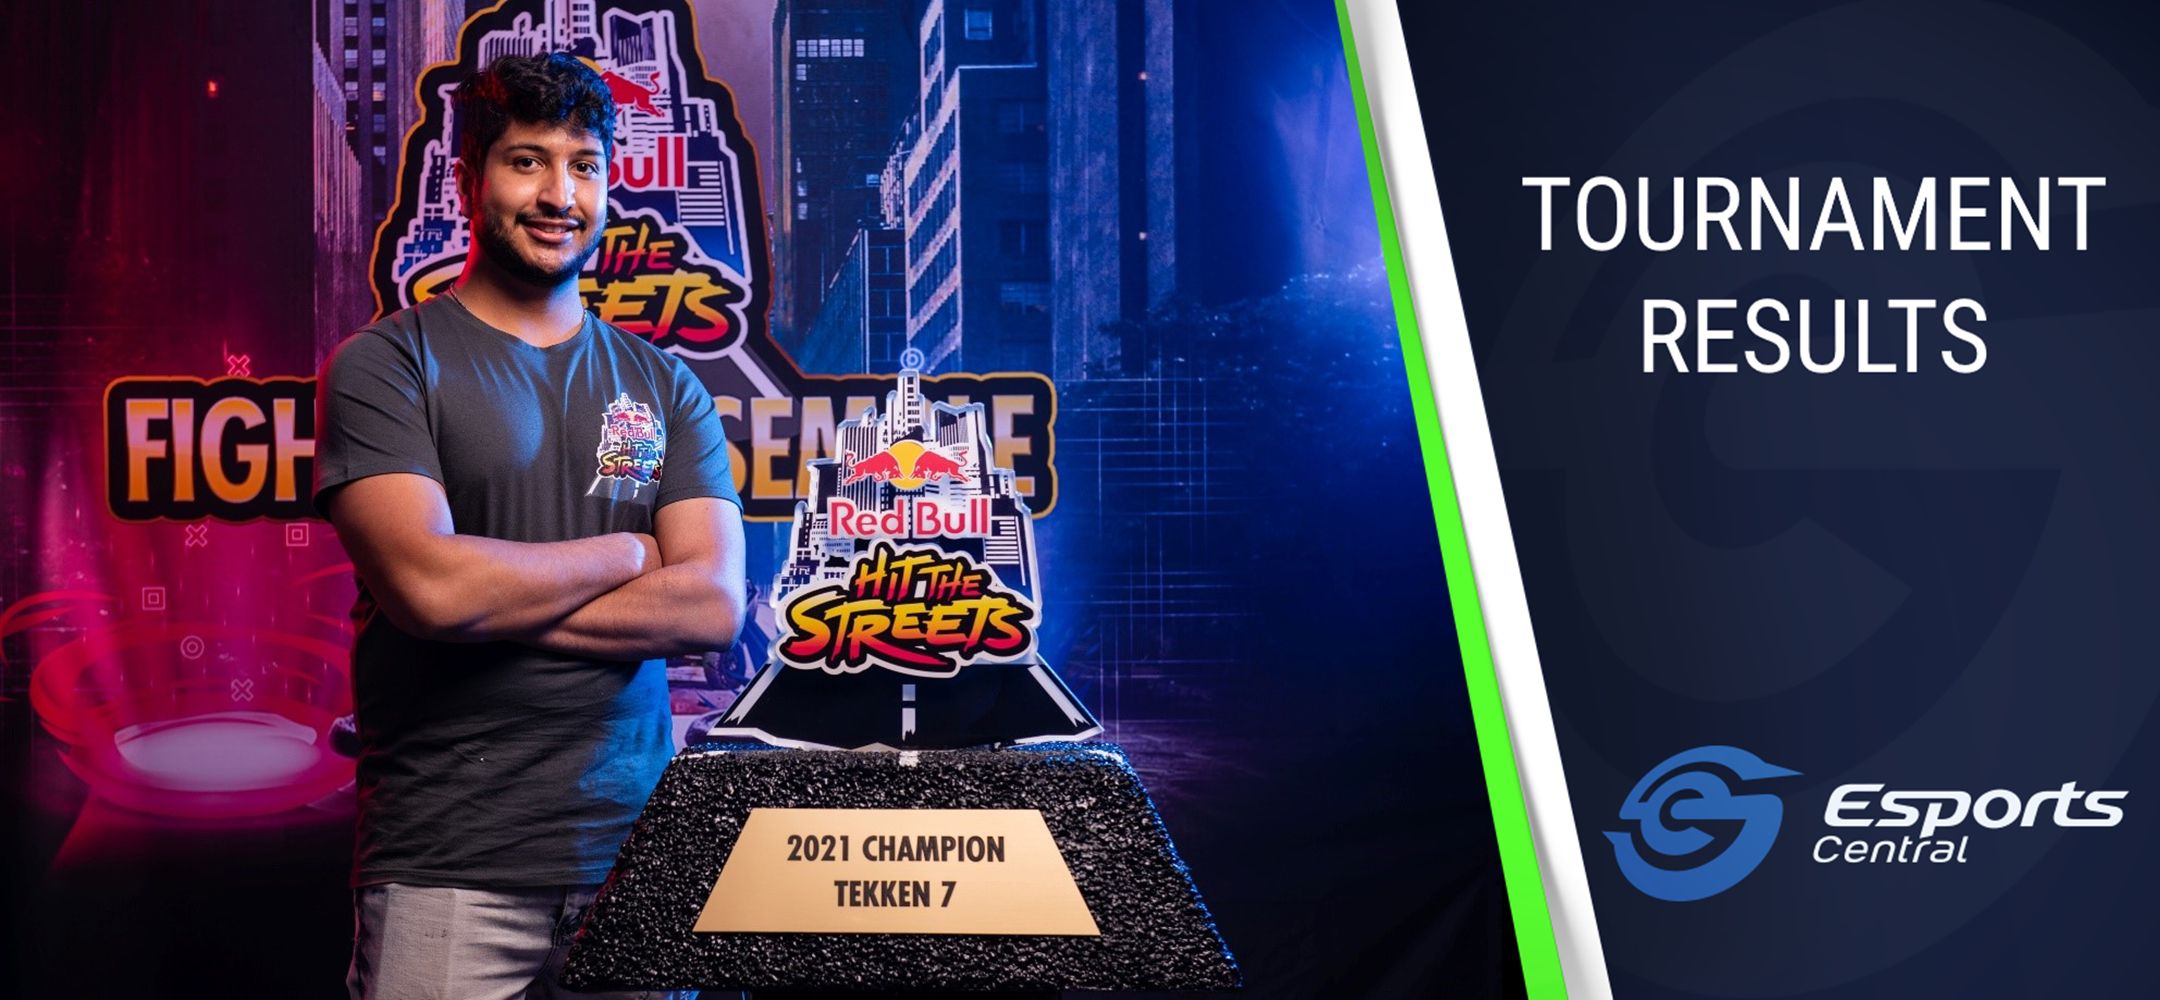 Red Bull Hit The Streets crowns 2021 Tekken 7 Champion! - Esports